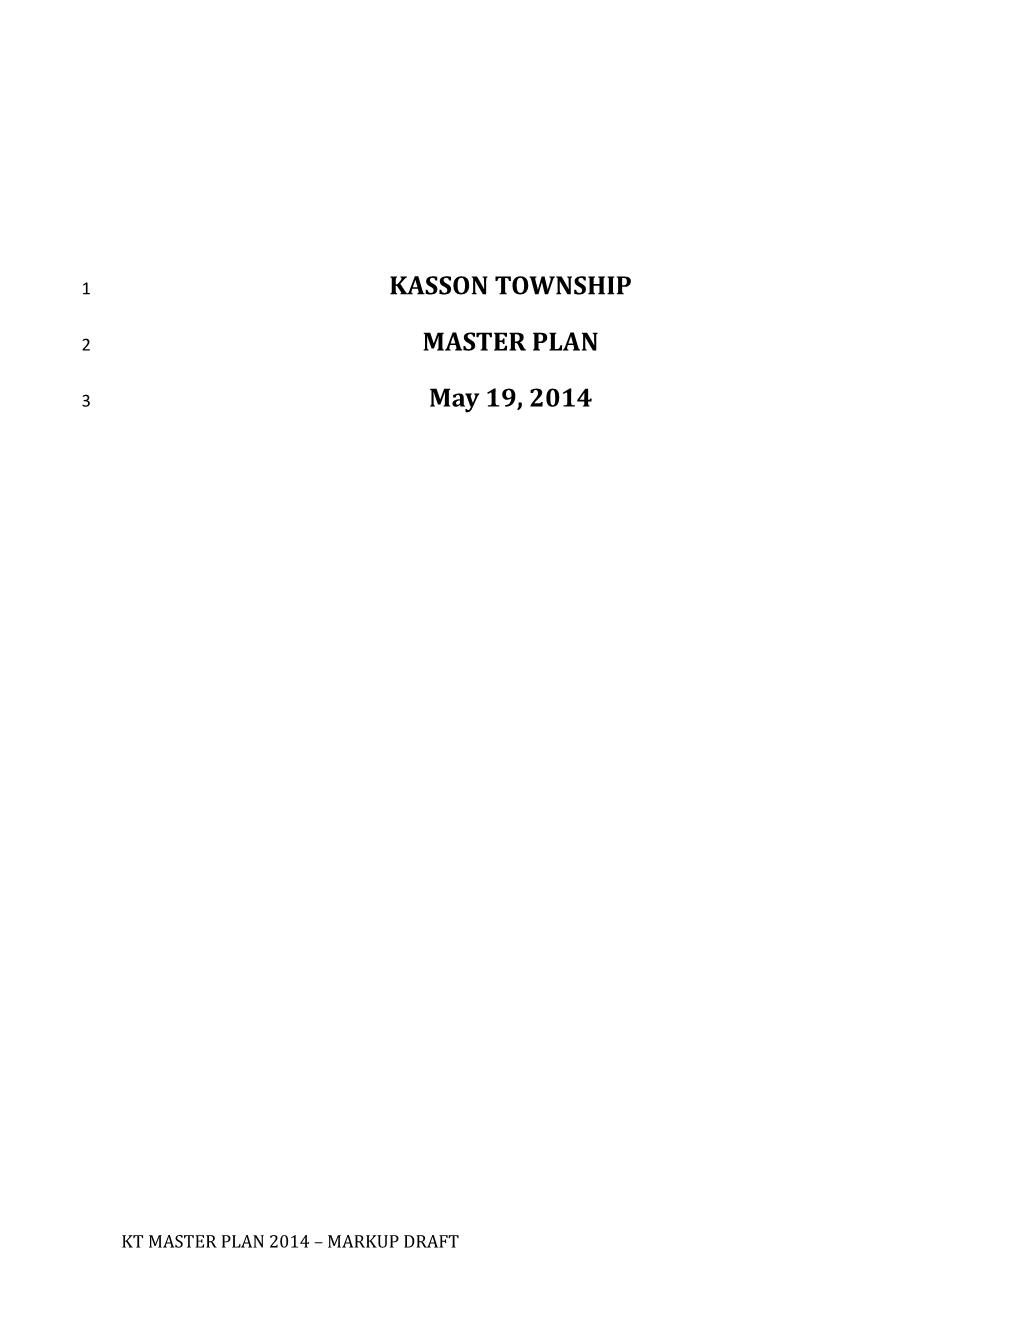 KASSON TOWNSHIP MASTER PLAN May 19, 2014